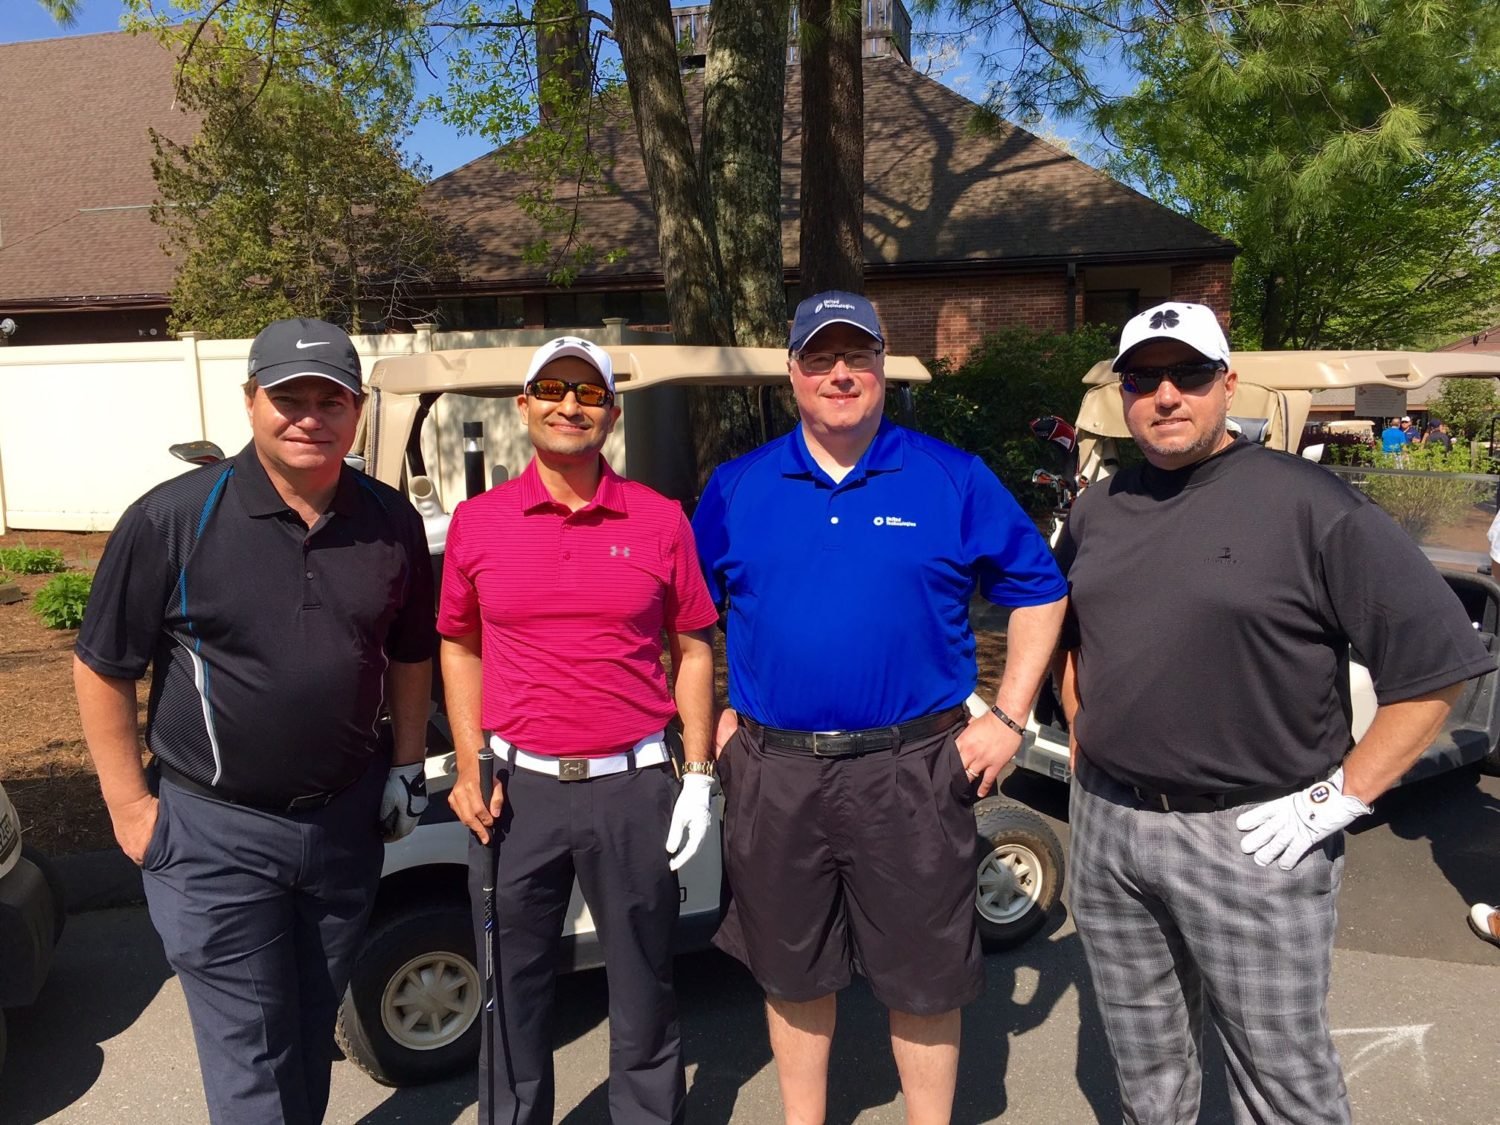 From left: Tom Corbin (RGBSI), Ravi Kumar (RGBSI), Steve Bohlman (UTC), Scott Aicher (RGBSI) at the start of the tournament